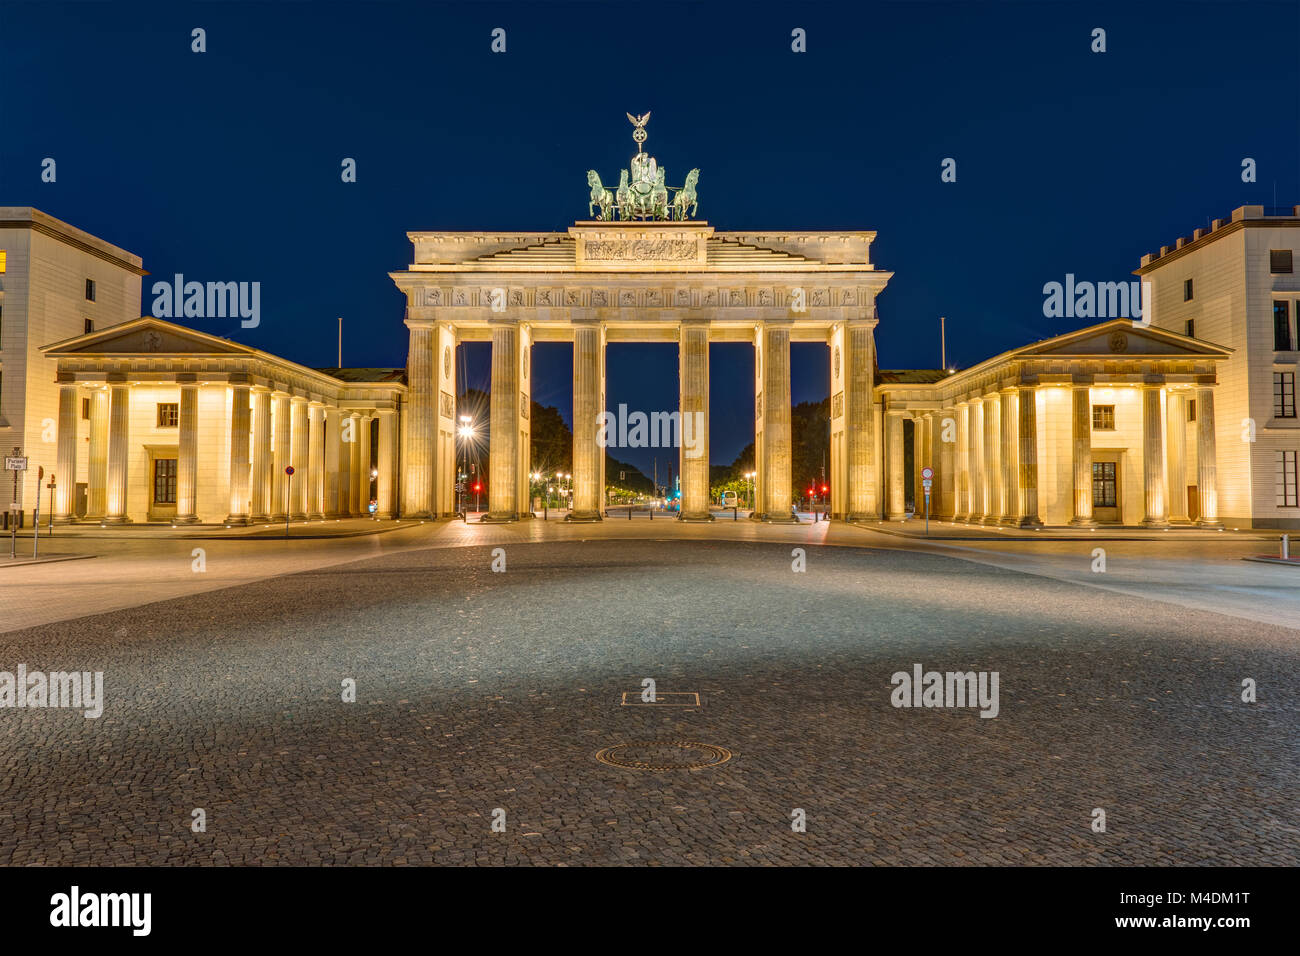 The famous Brandenburg Gate in Berlin illuminated at darkness Stock Photo